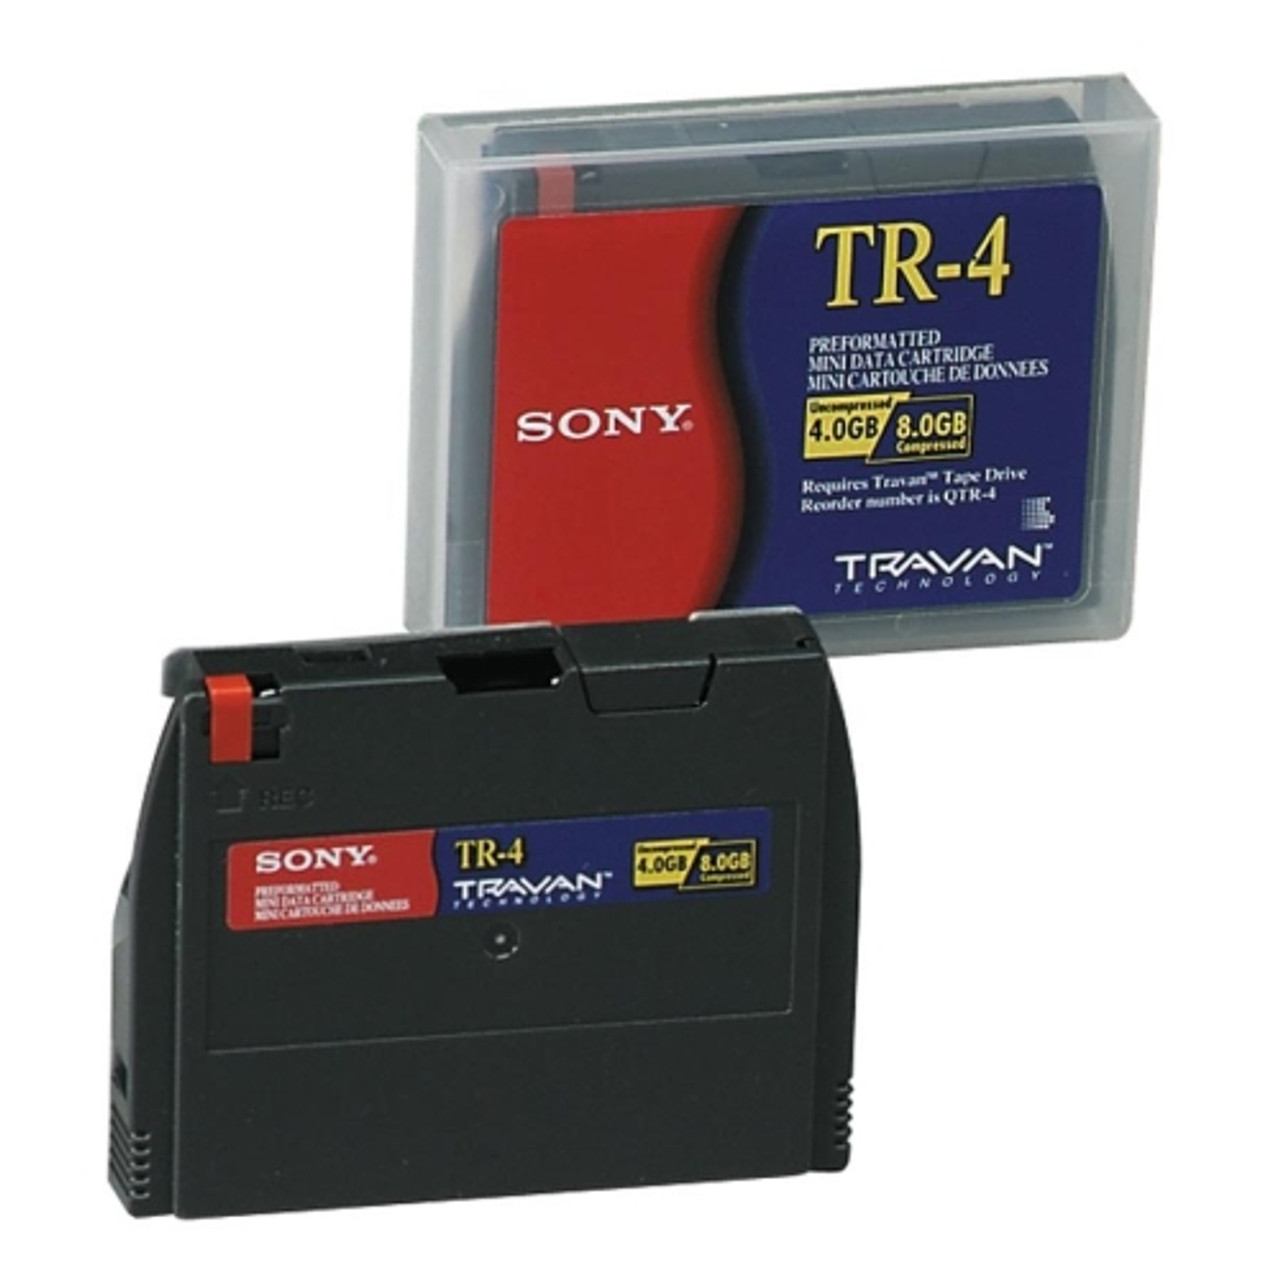 Sony Travan TR-4 Tape Cartridge TR-4 4GB (Native) / 8GB (Compressed) 738.19 ft Tape Length Mfr P/N QTRNS8